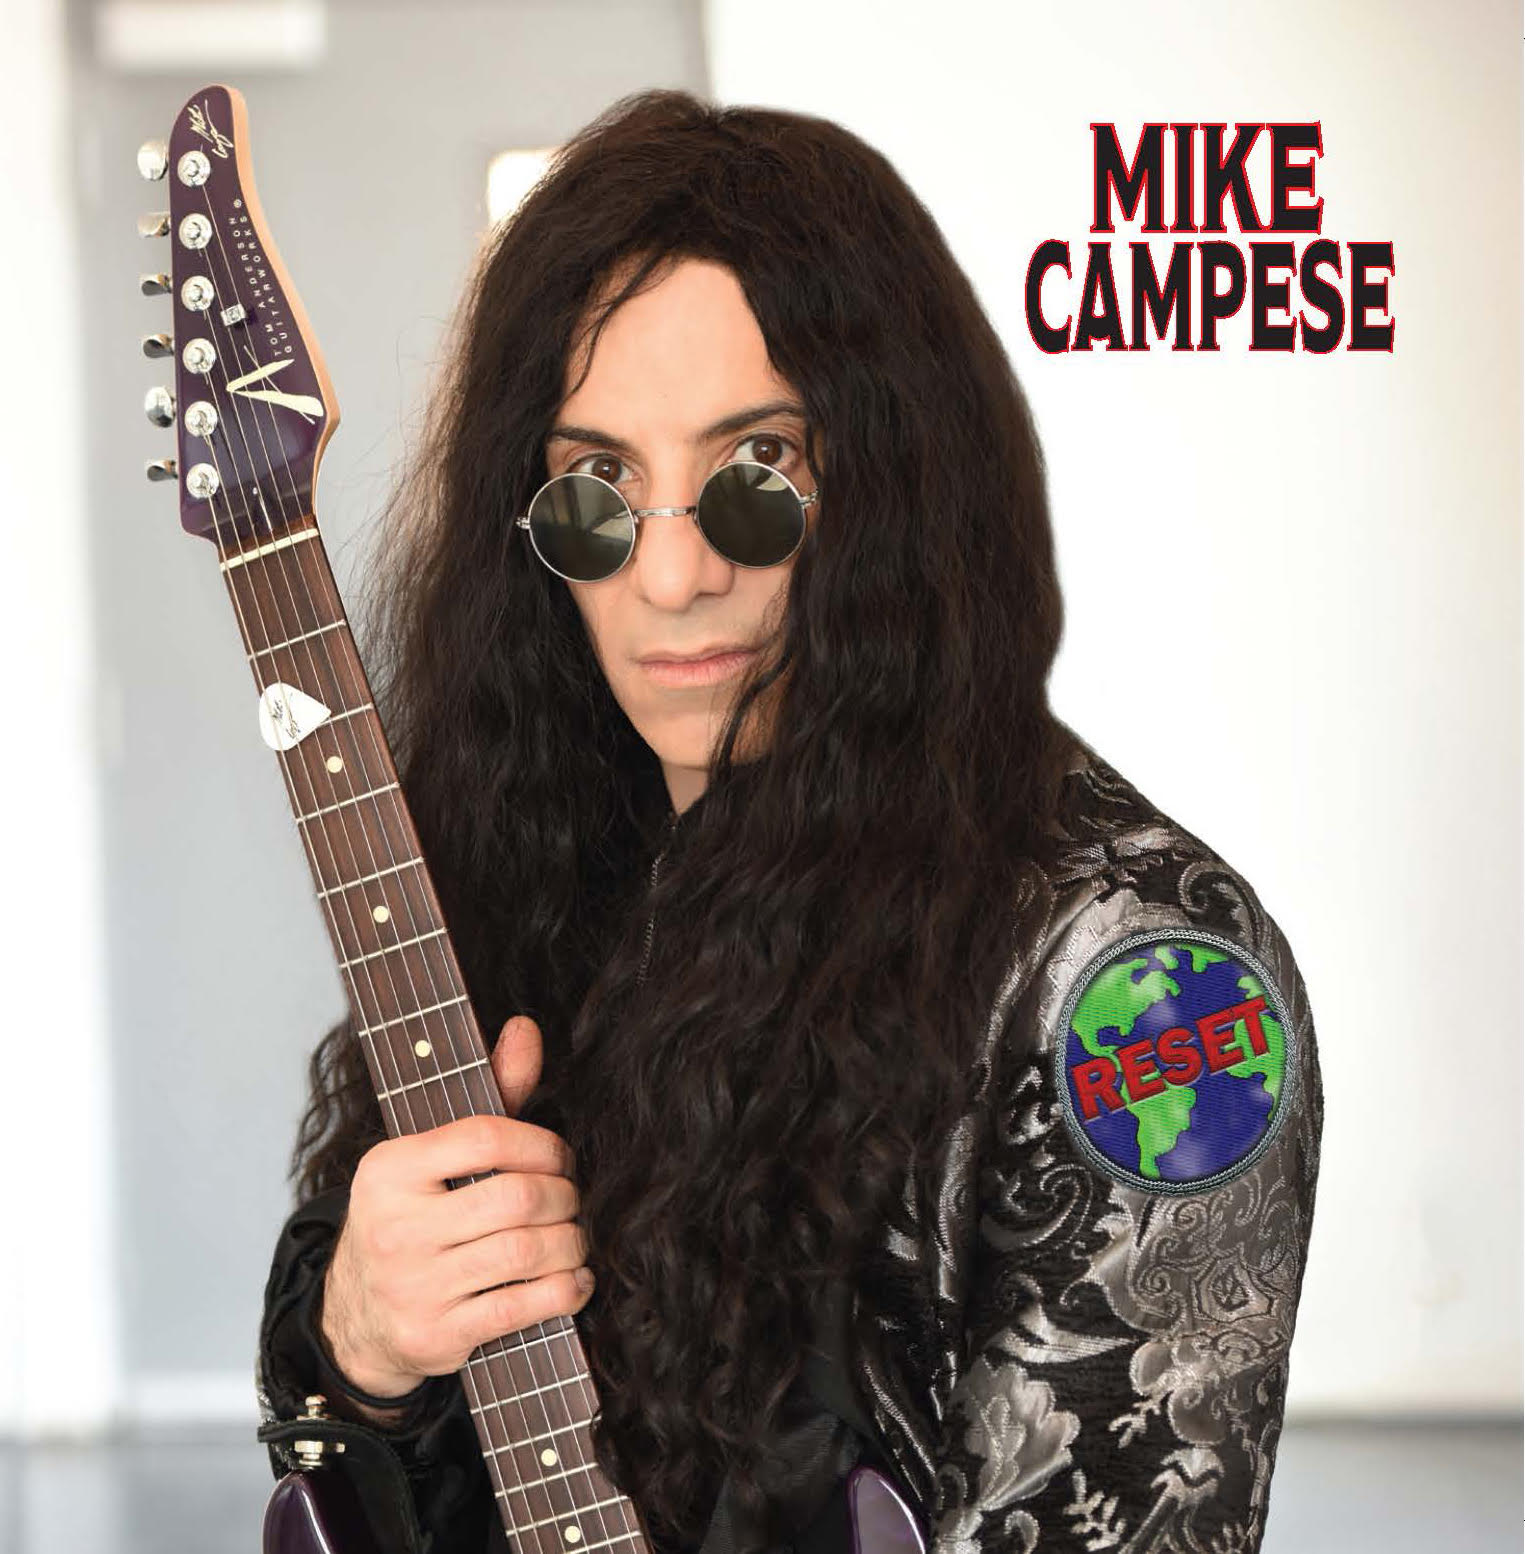 Mike Campese "Reset" Album.